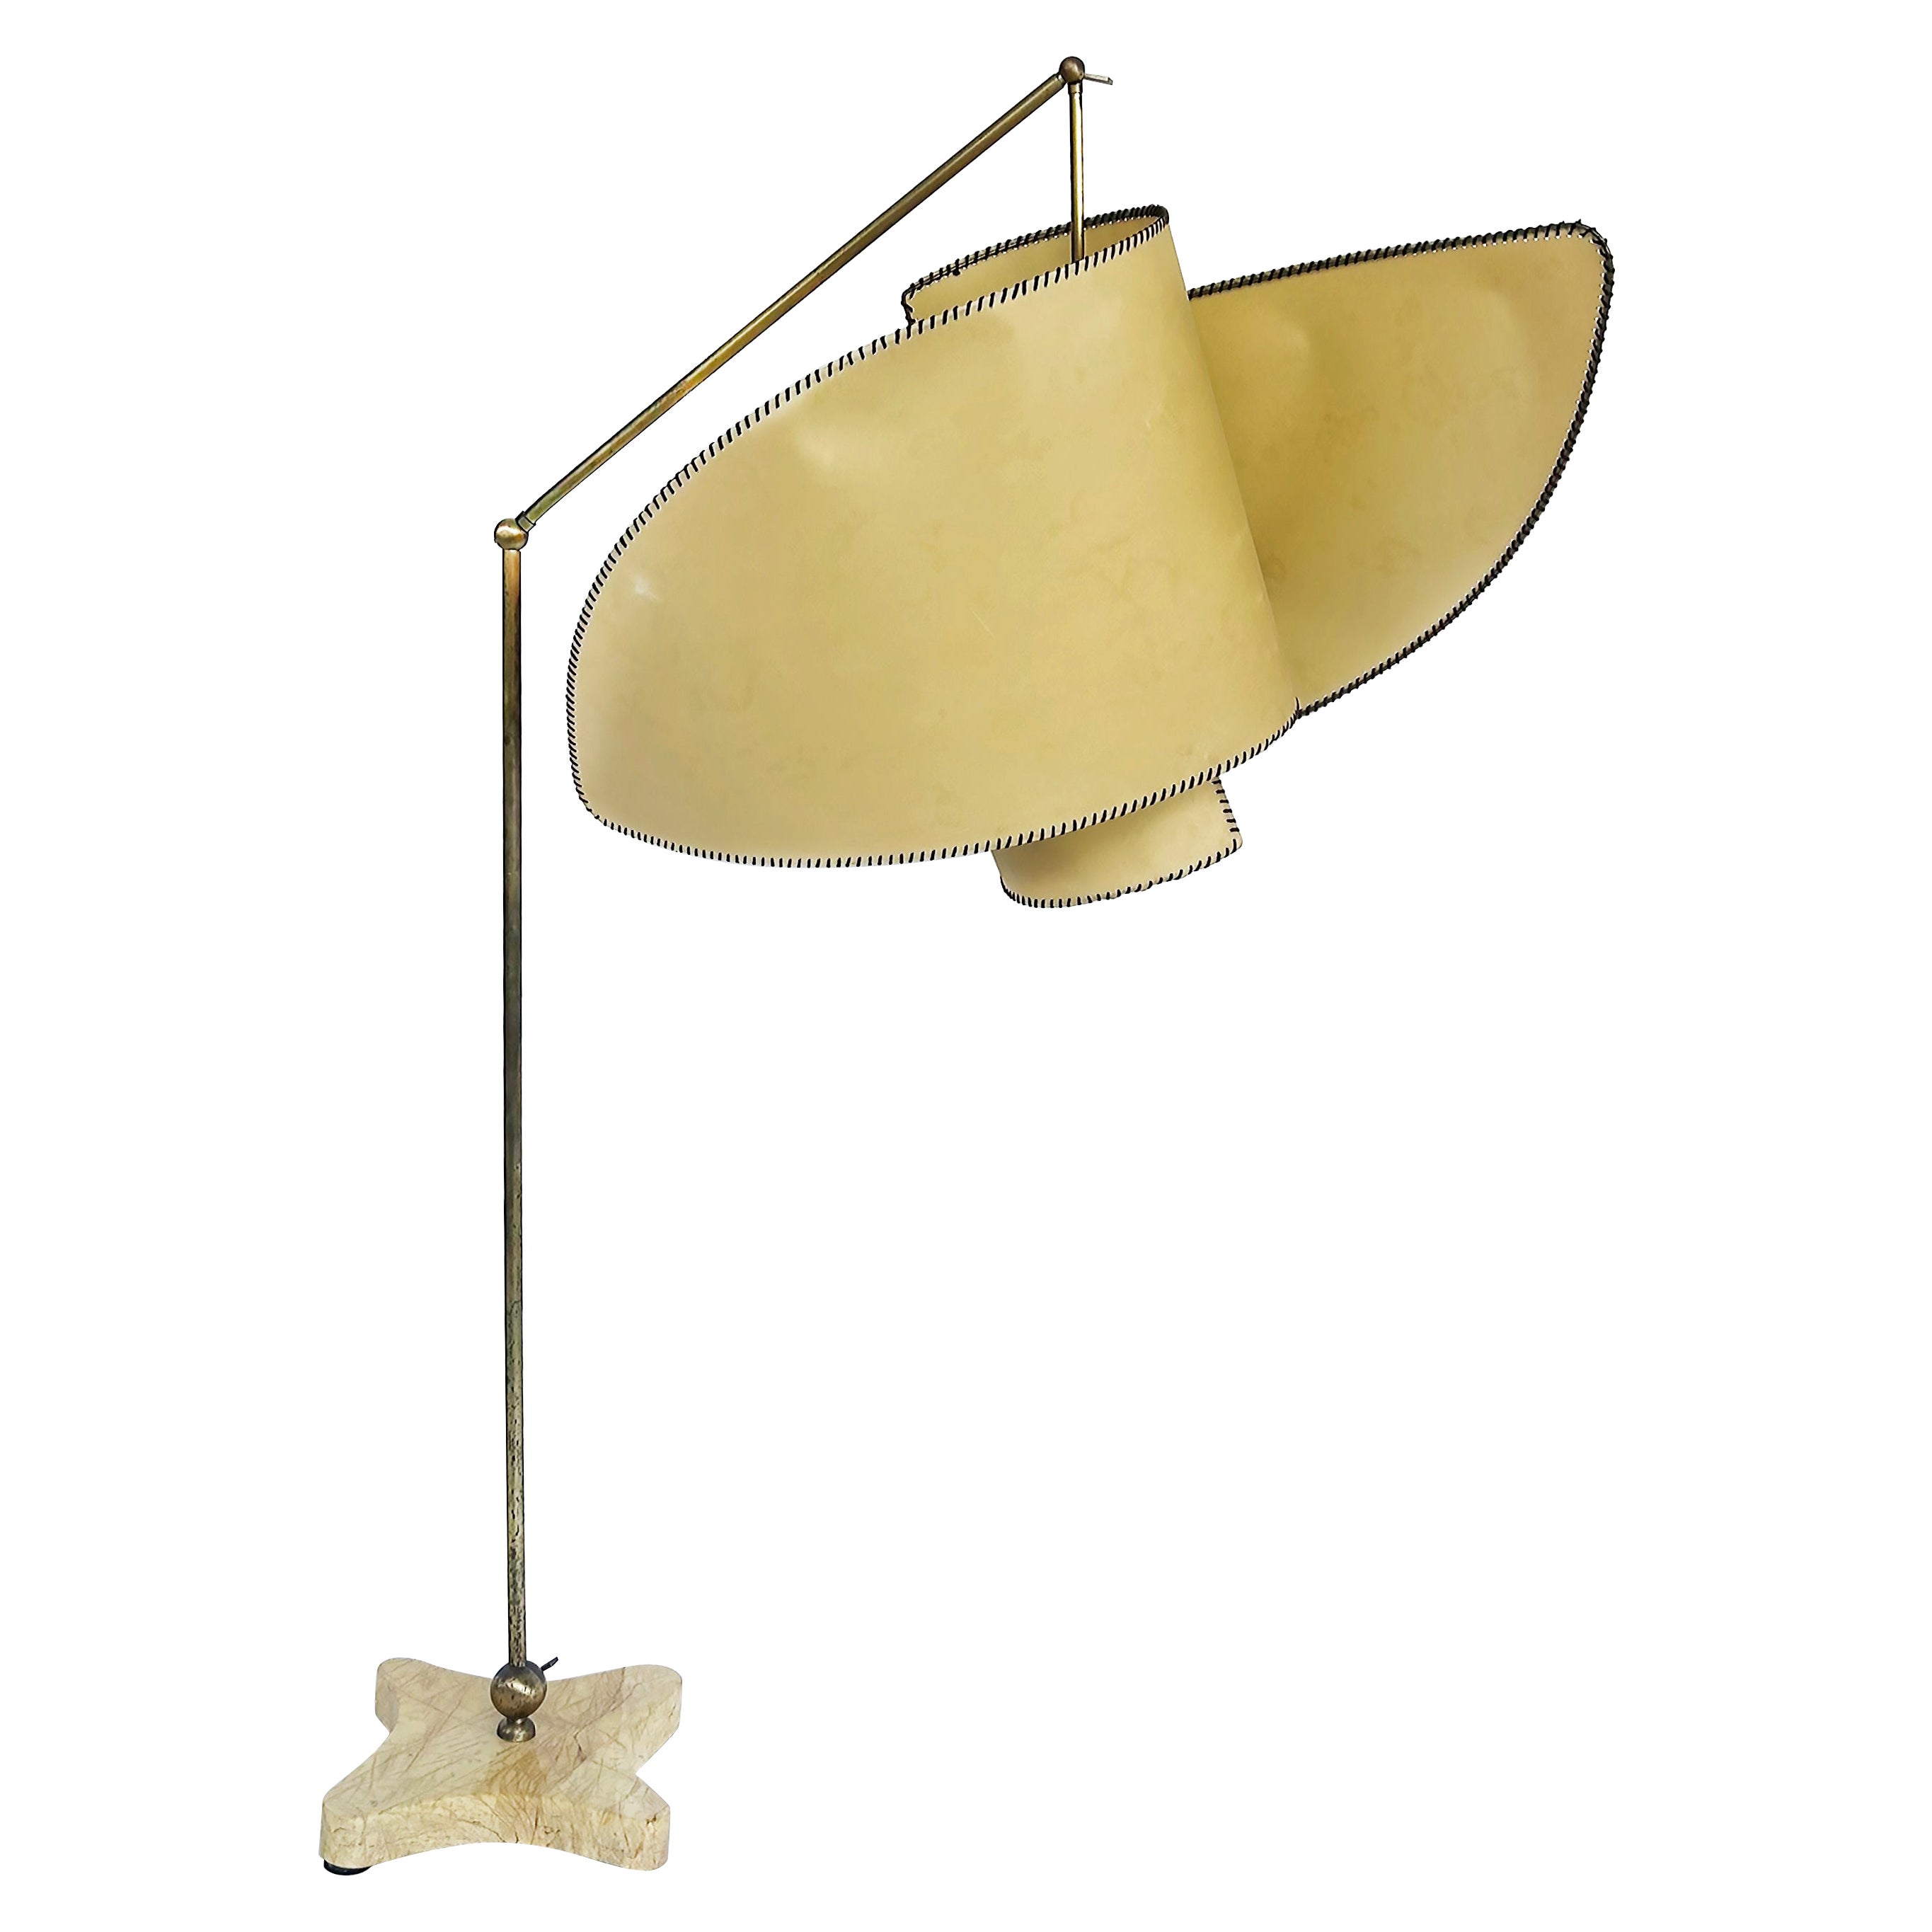 Carlo Mollino "Suora" Parchment Floor Lamp 1947/1994 in Brass, Marble, Leather